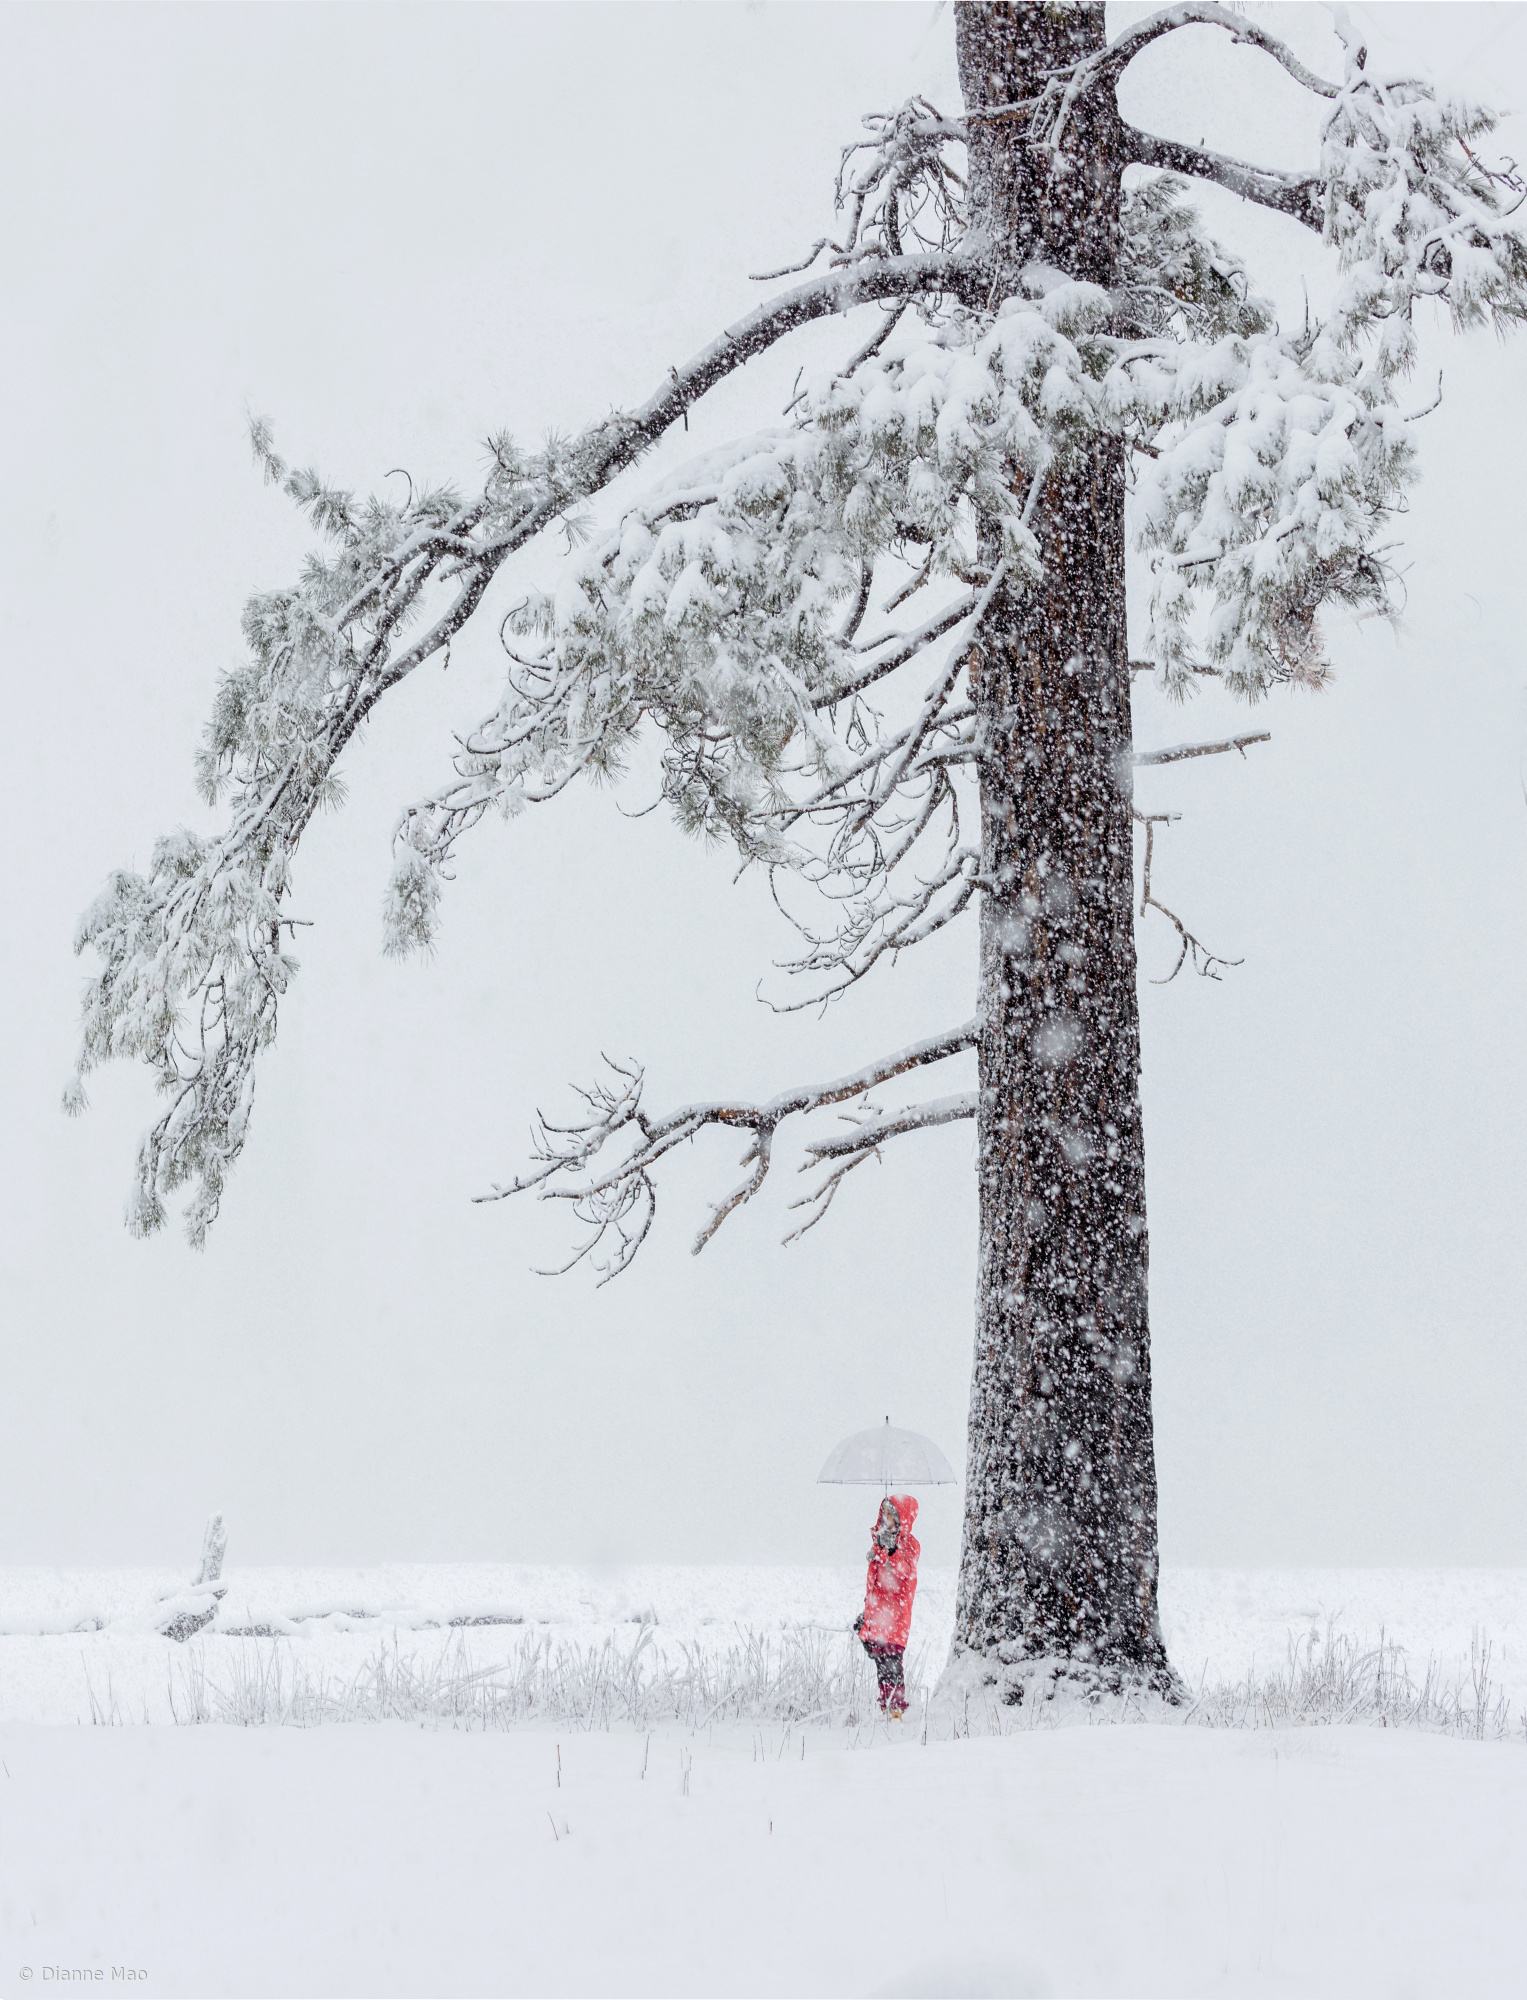 In Snow by Dianne Mao